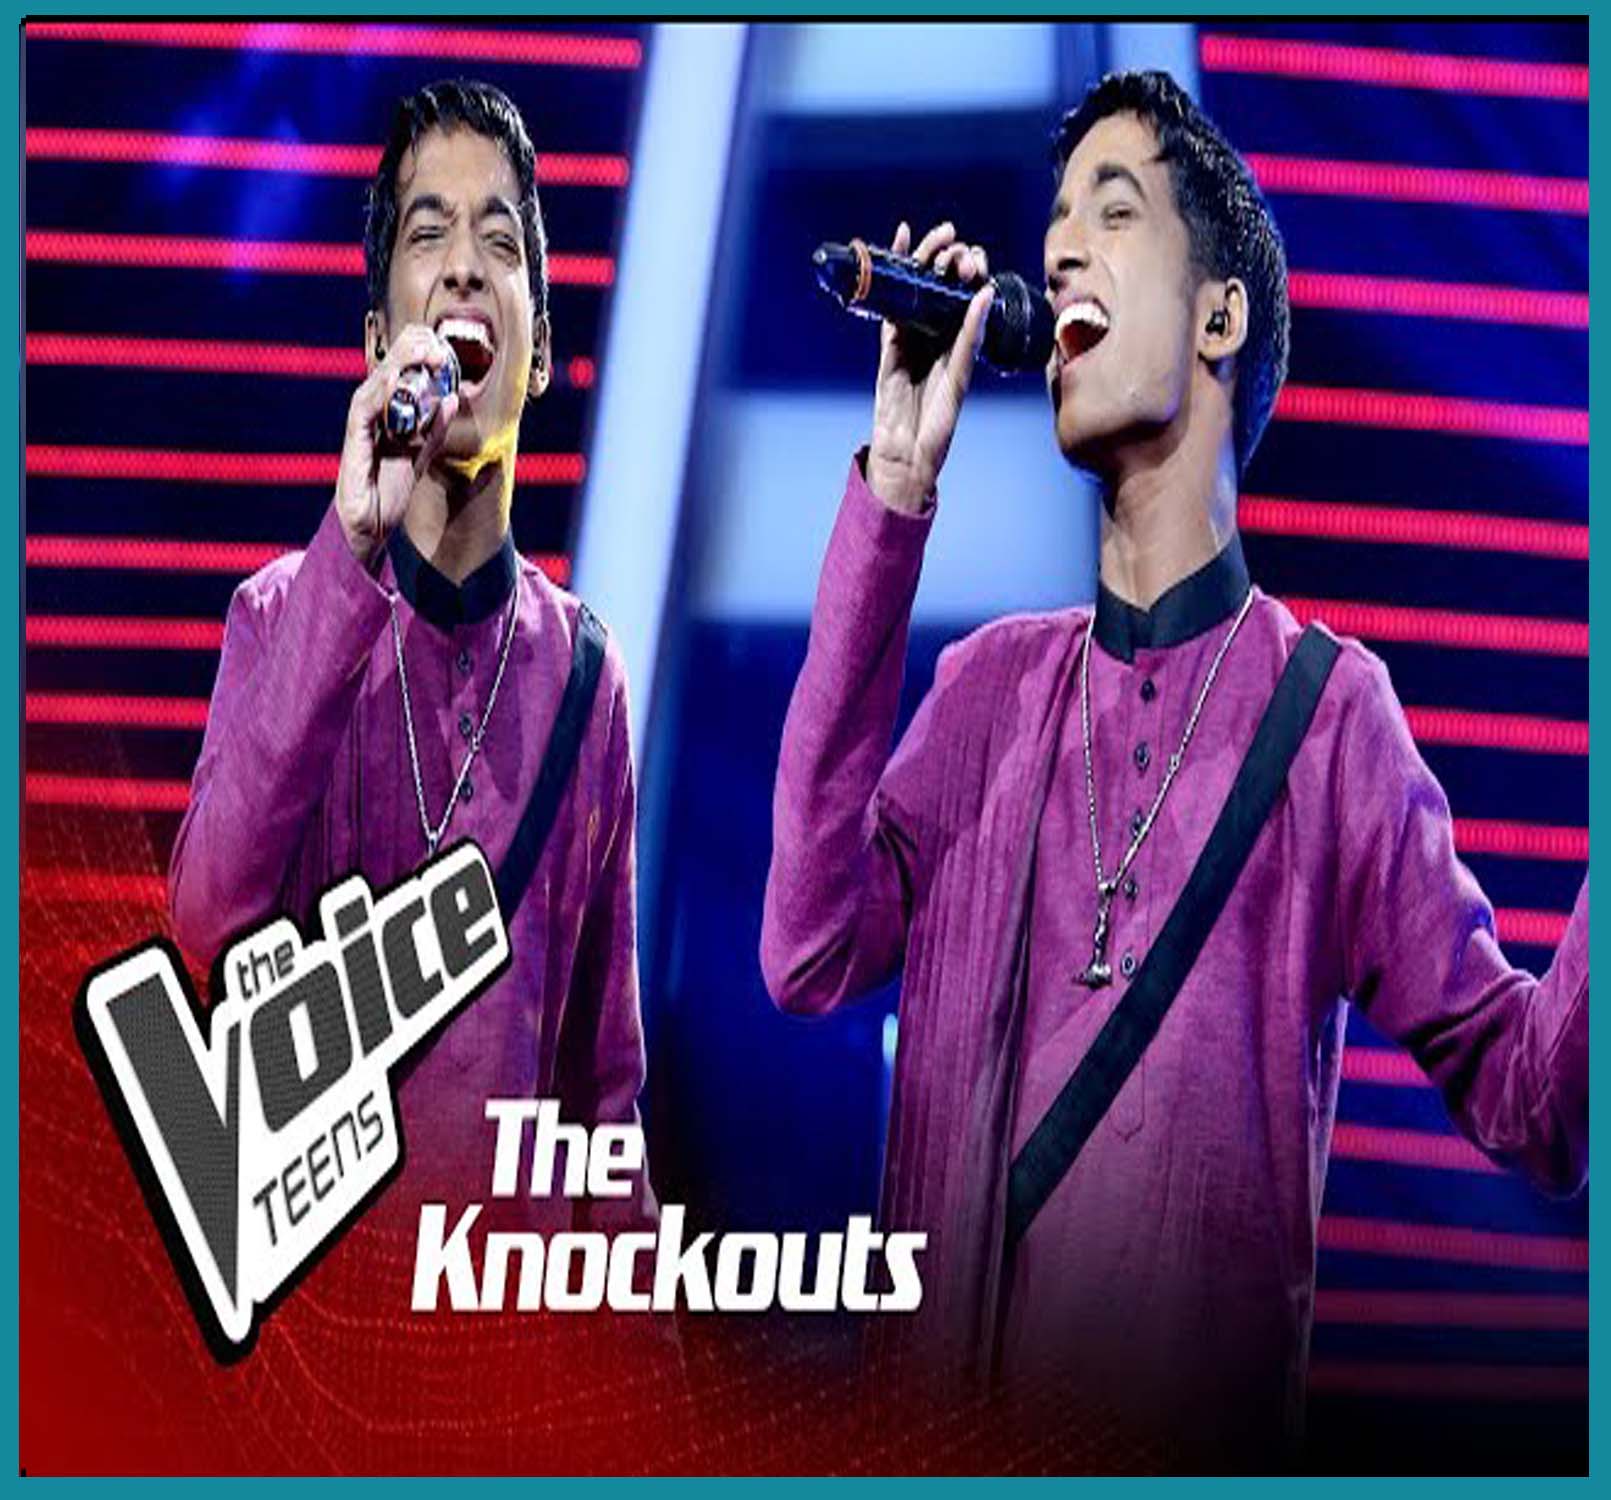 Hansa Rajini (The Voice Teens Sri Lanka Knockouts)